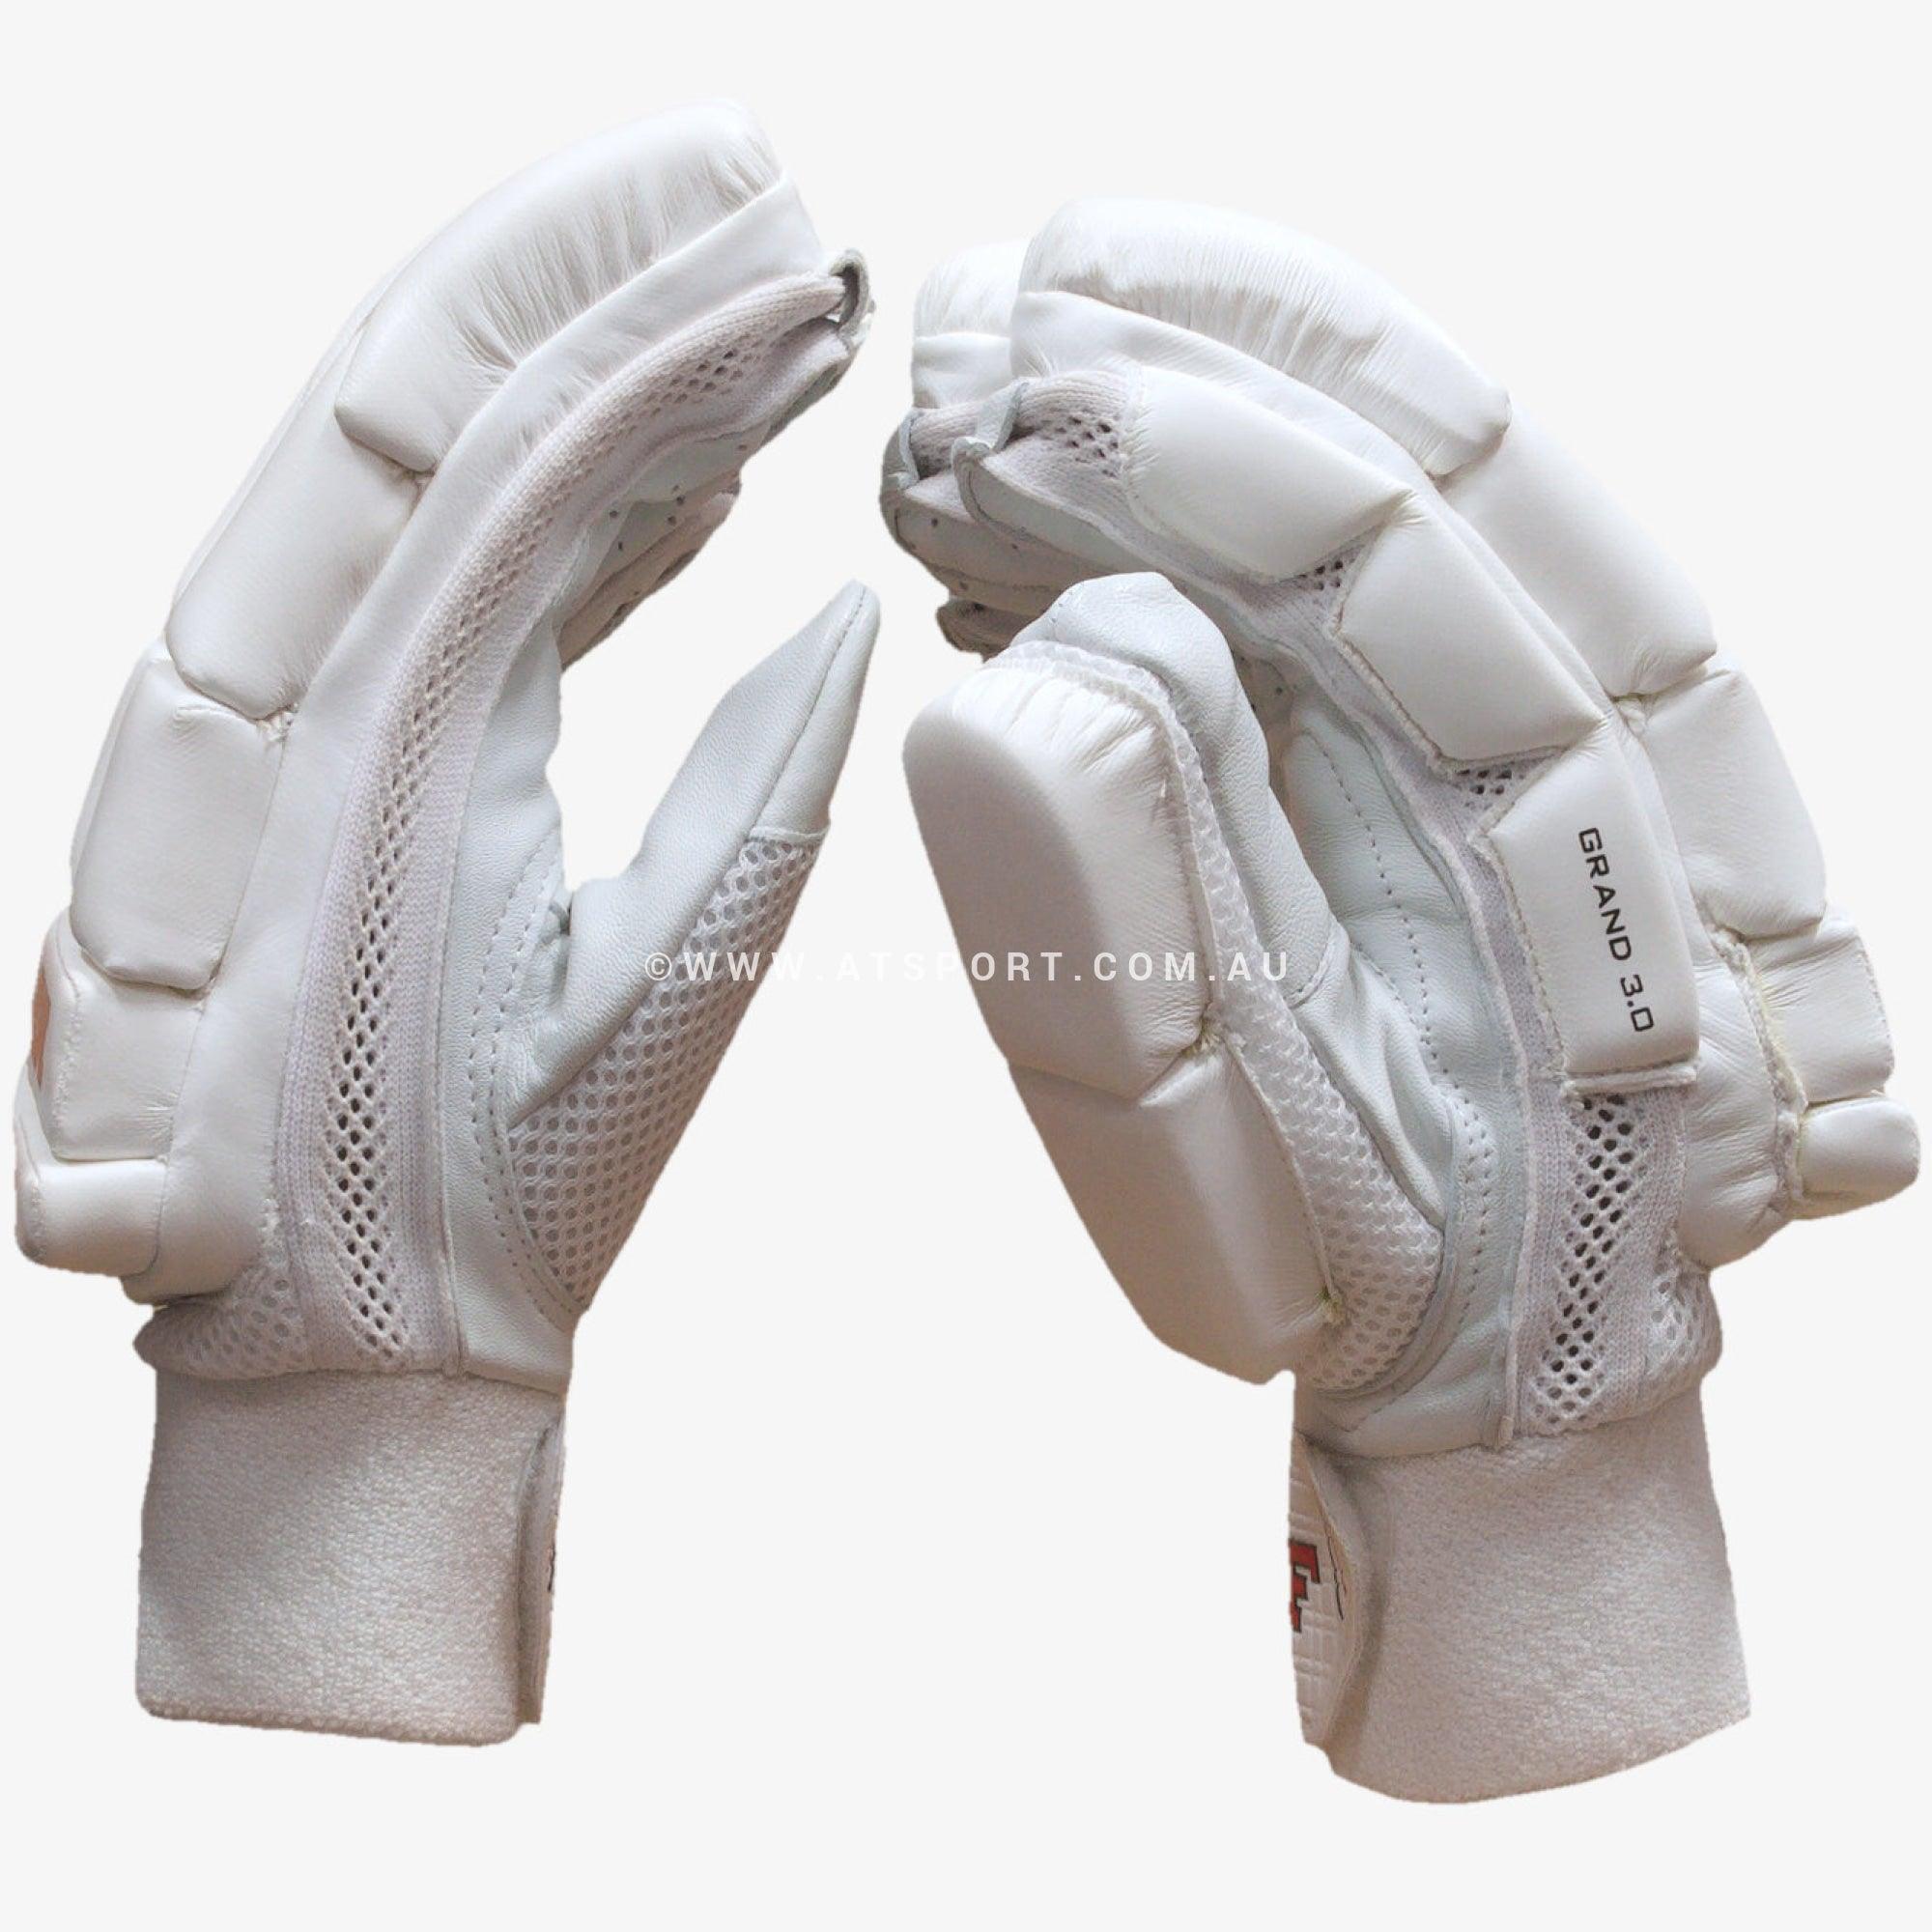 MRF Grand Edition 3.0 Cricket Batting Gloves - ADULT - AT Sports